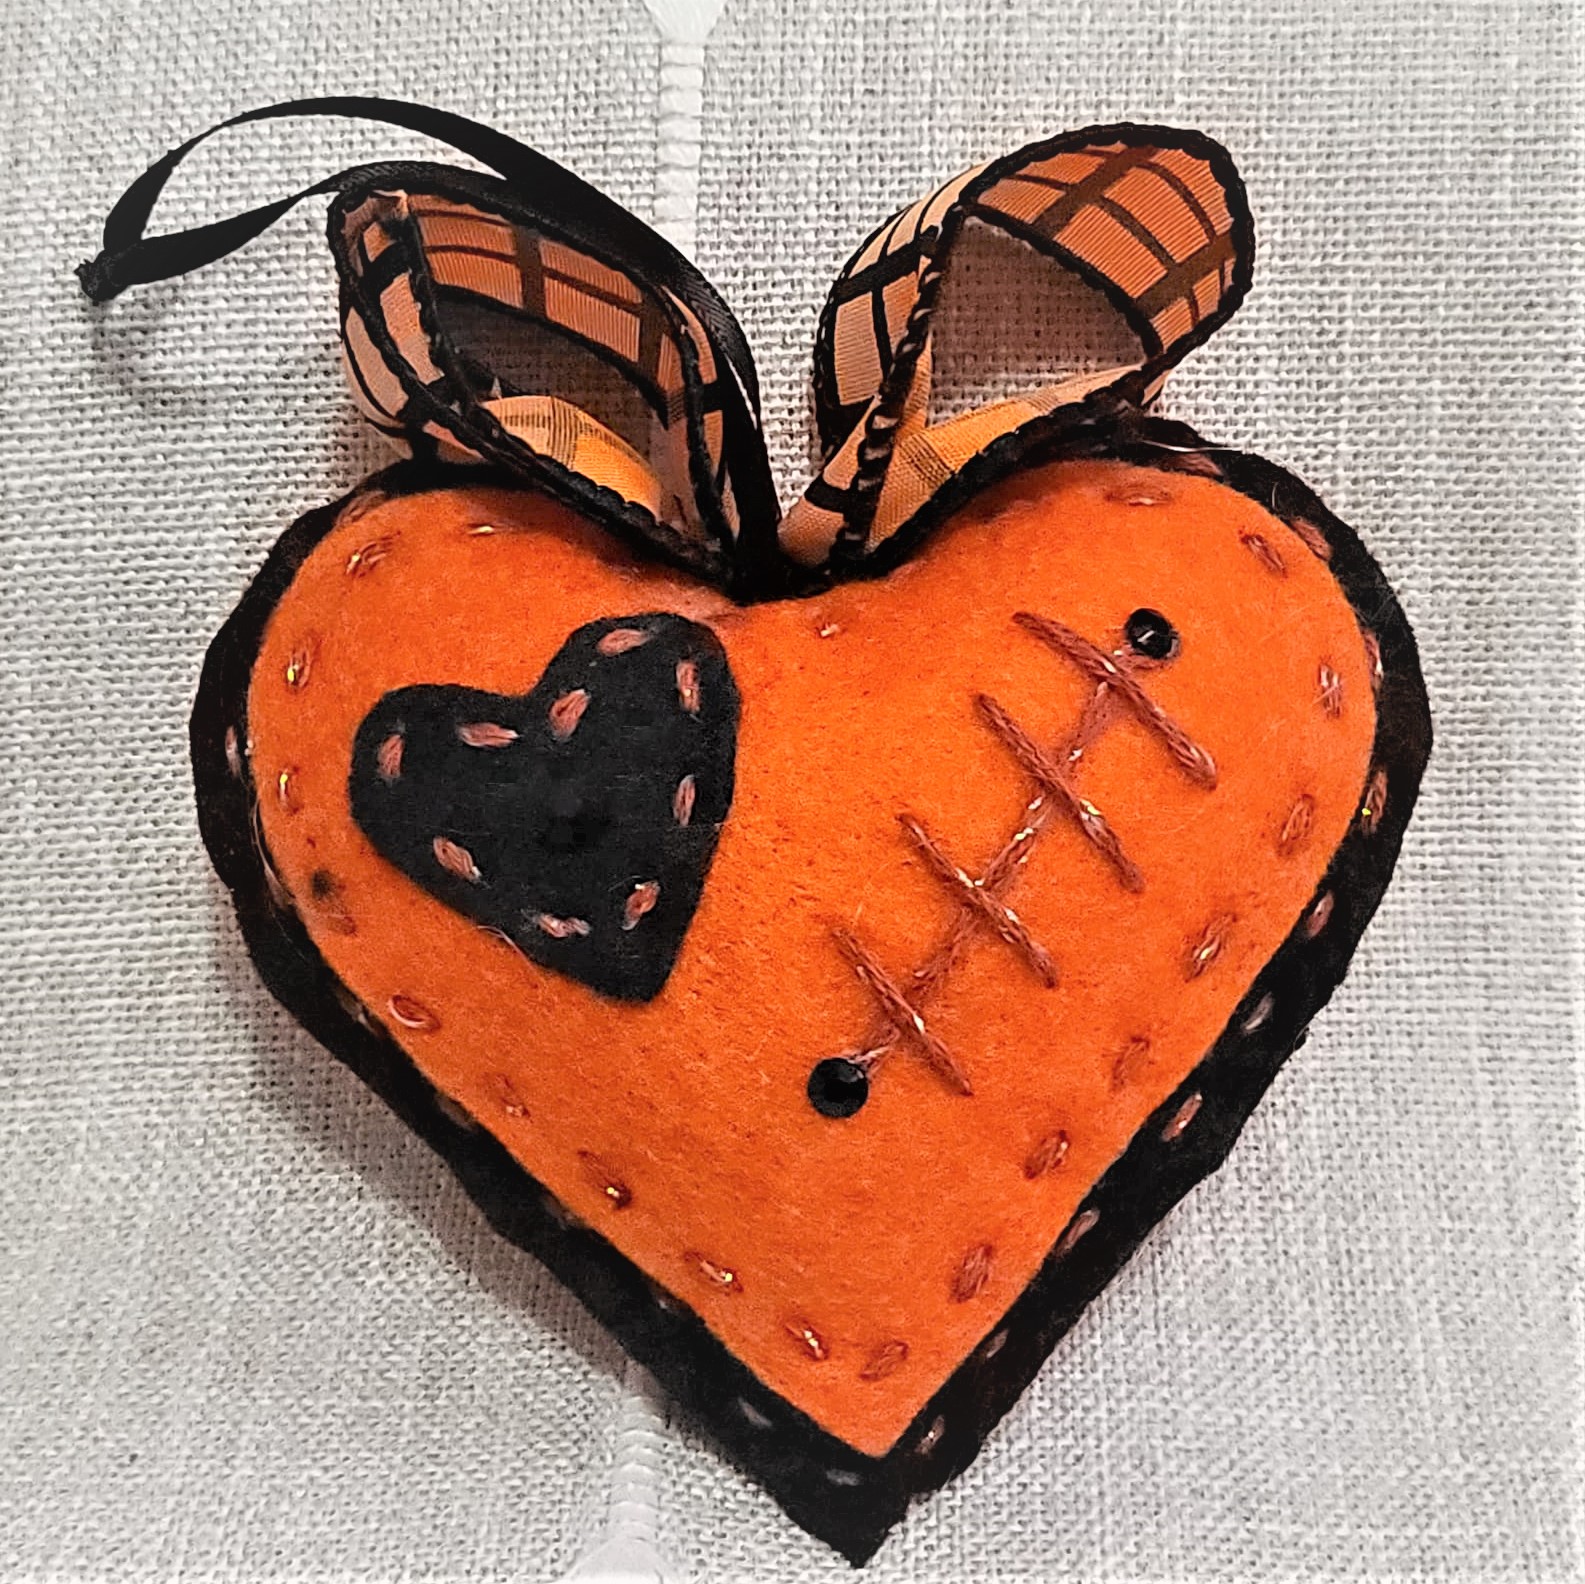 Halloween felt heart in stitches ornament 2 sided orange black